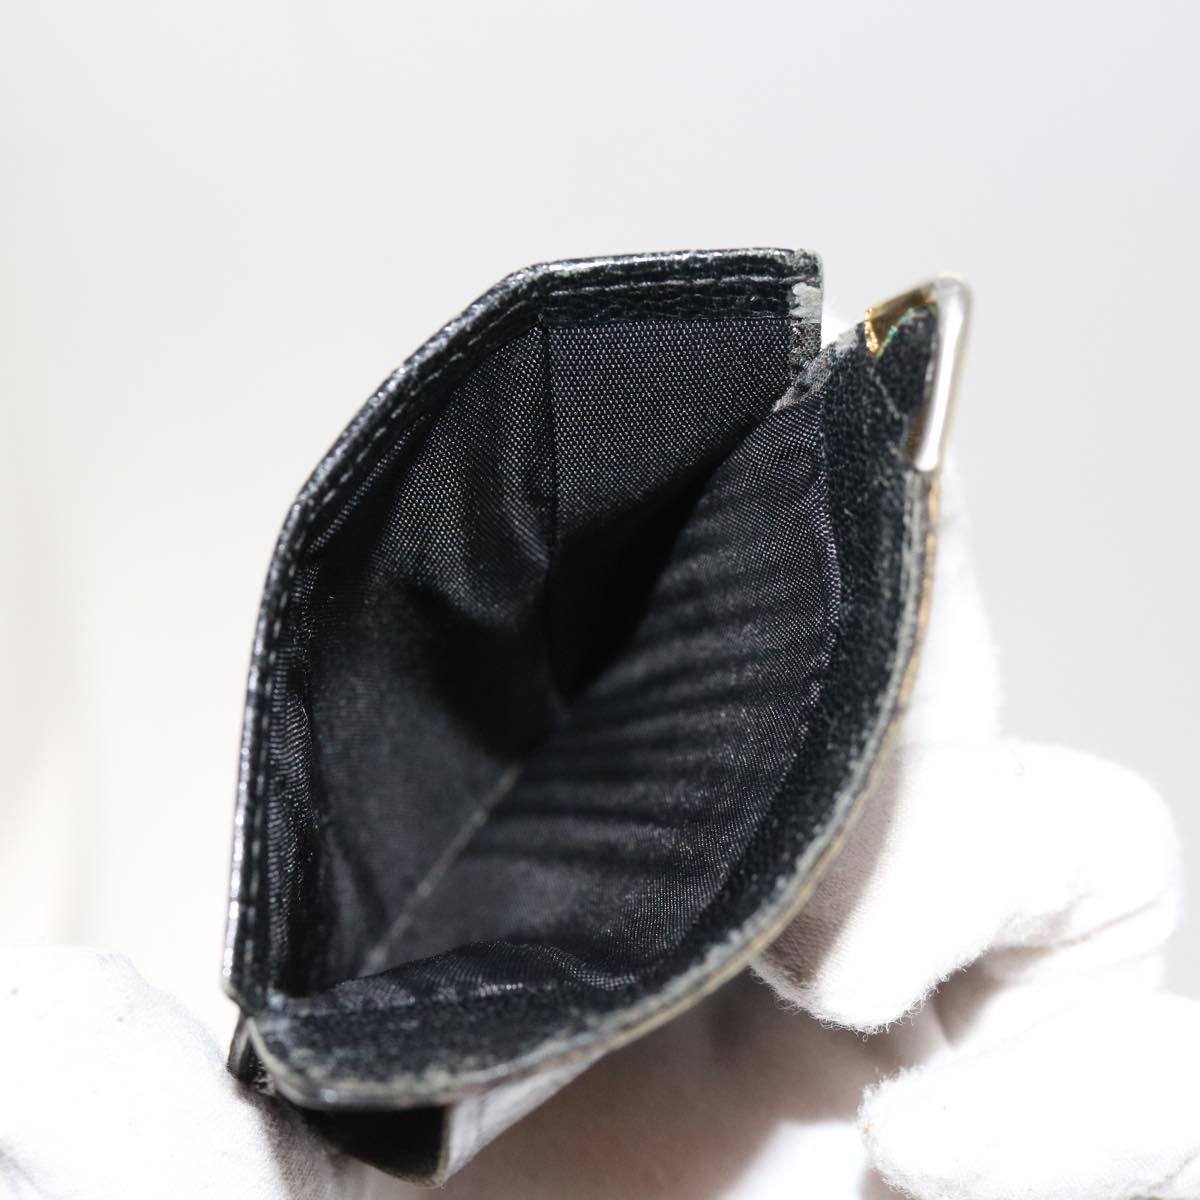 CELINE Macadam Canvas Card Key Case Pouch Belt Leather 7Set Brown Auth ar11266